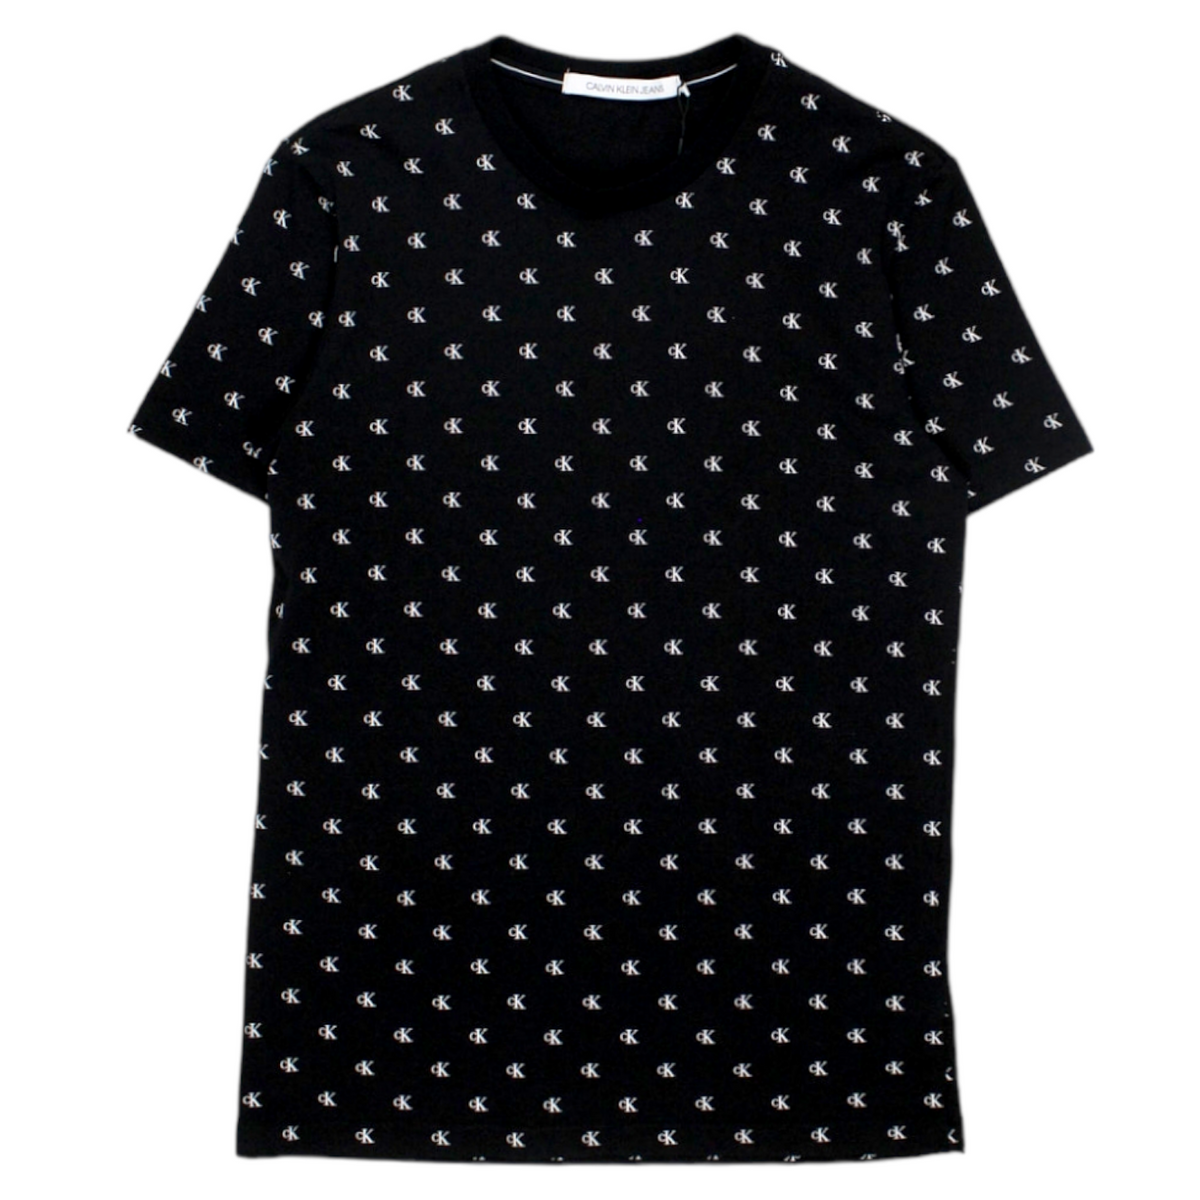 Calvin Klein Black Logo T-Shirt